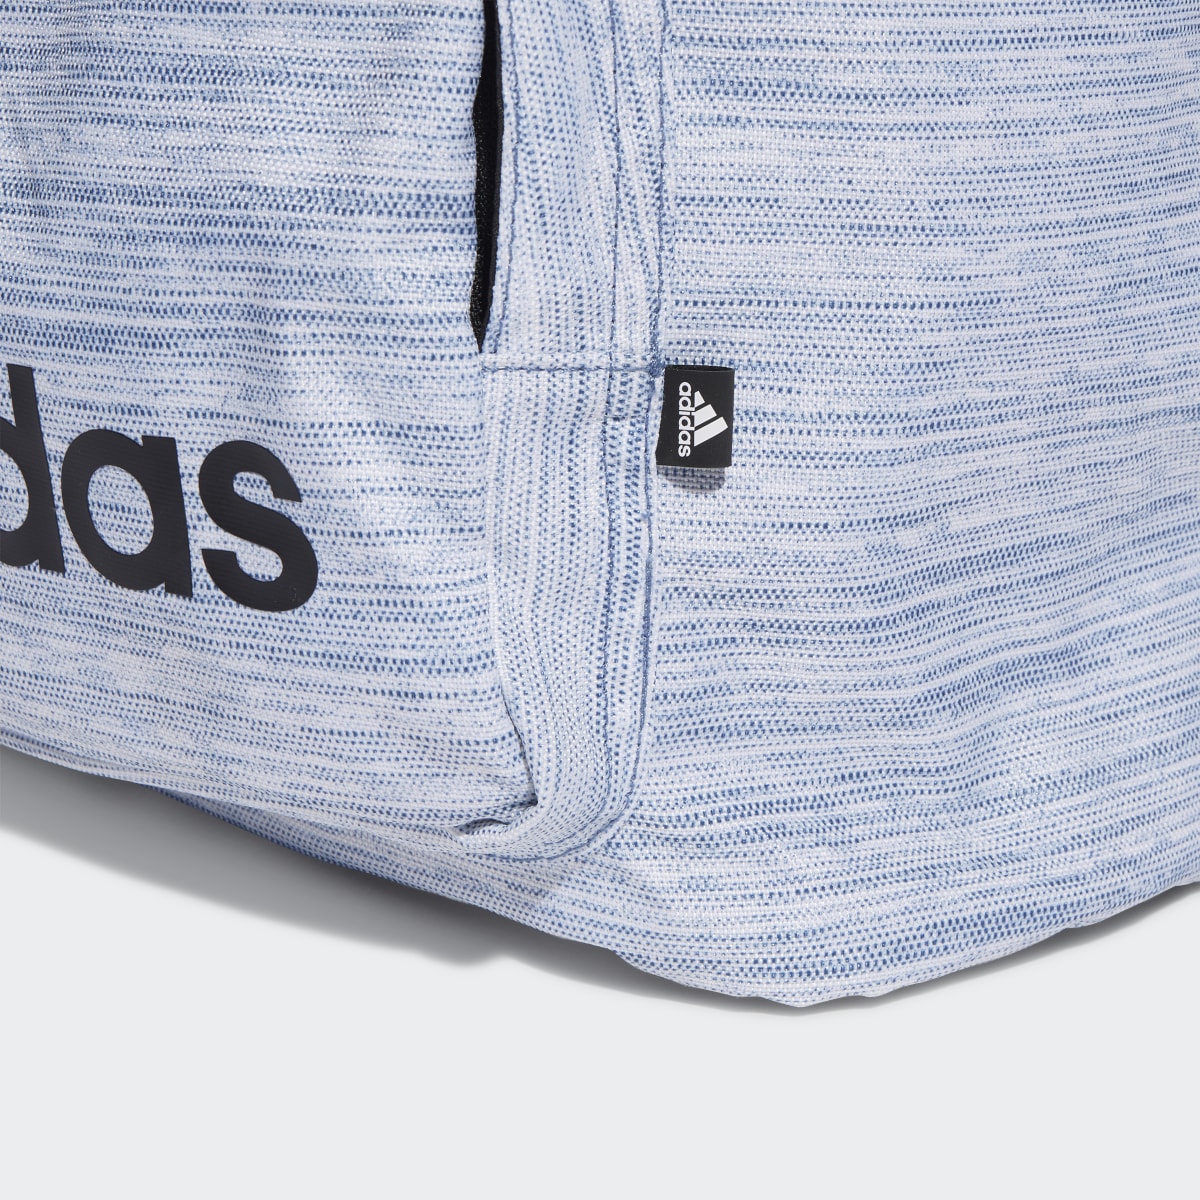 Adidas Classic Attitude Backpack. 6